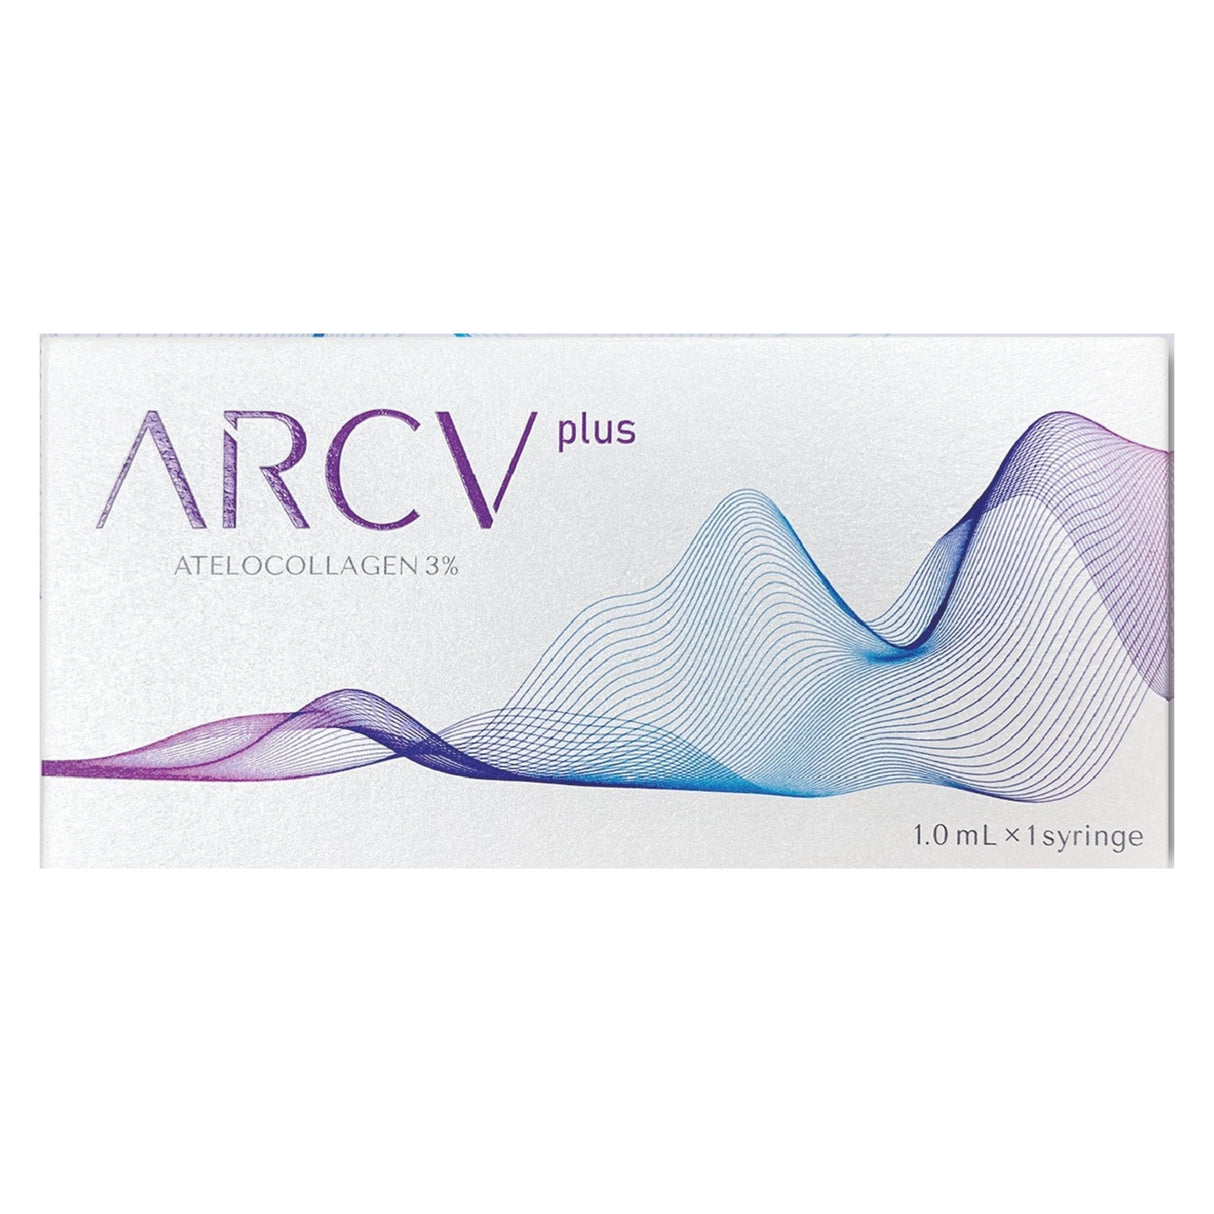 ARCV Plus Atelocollagen 3% - Filler Lux™ - Mesotherapy - Quiver Medic